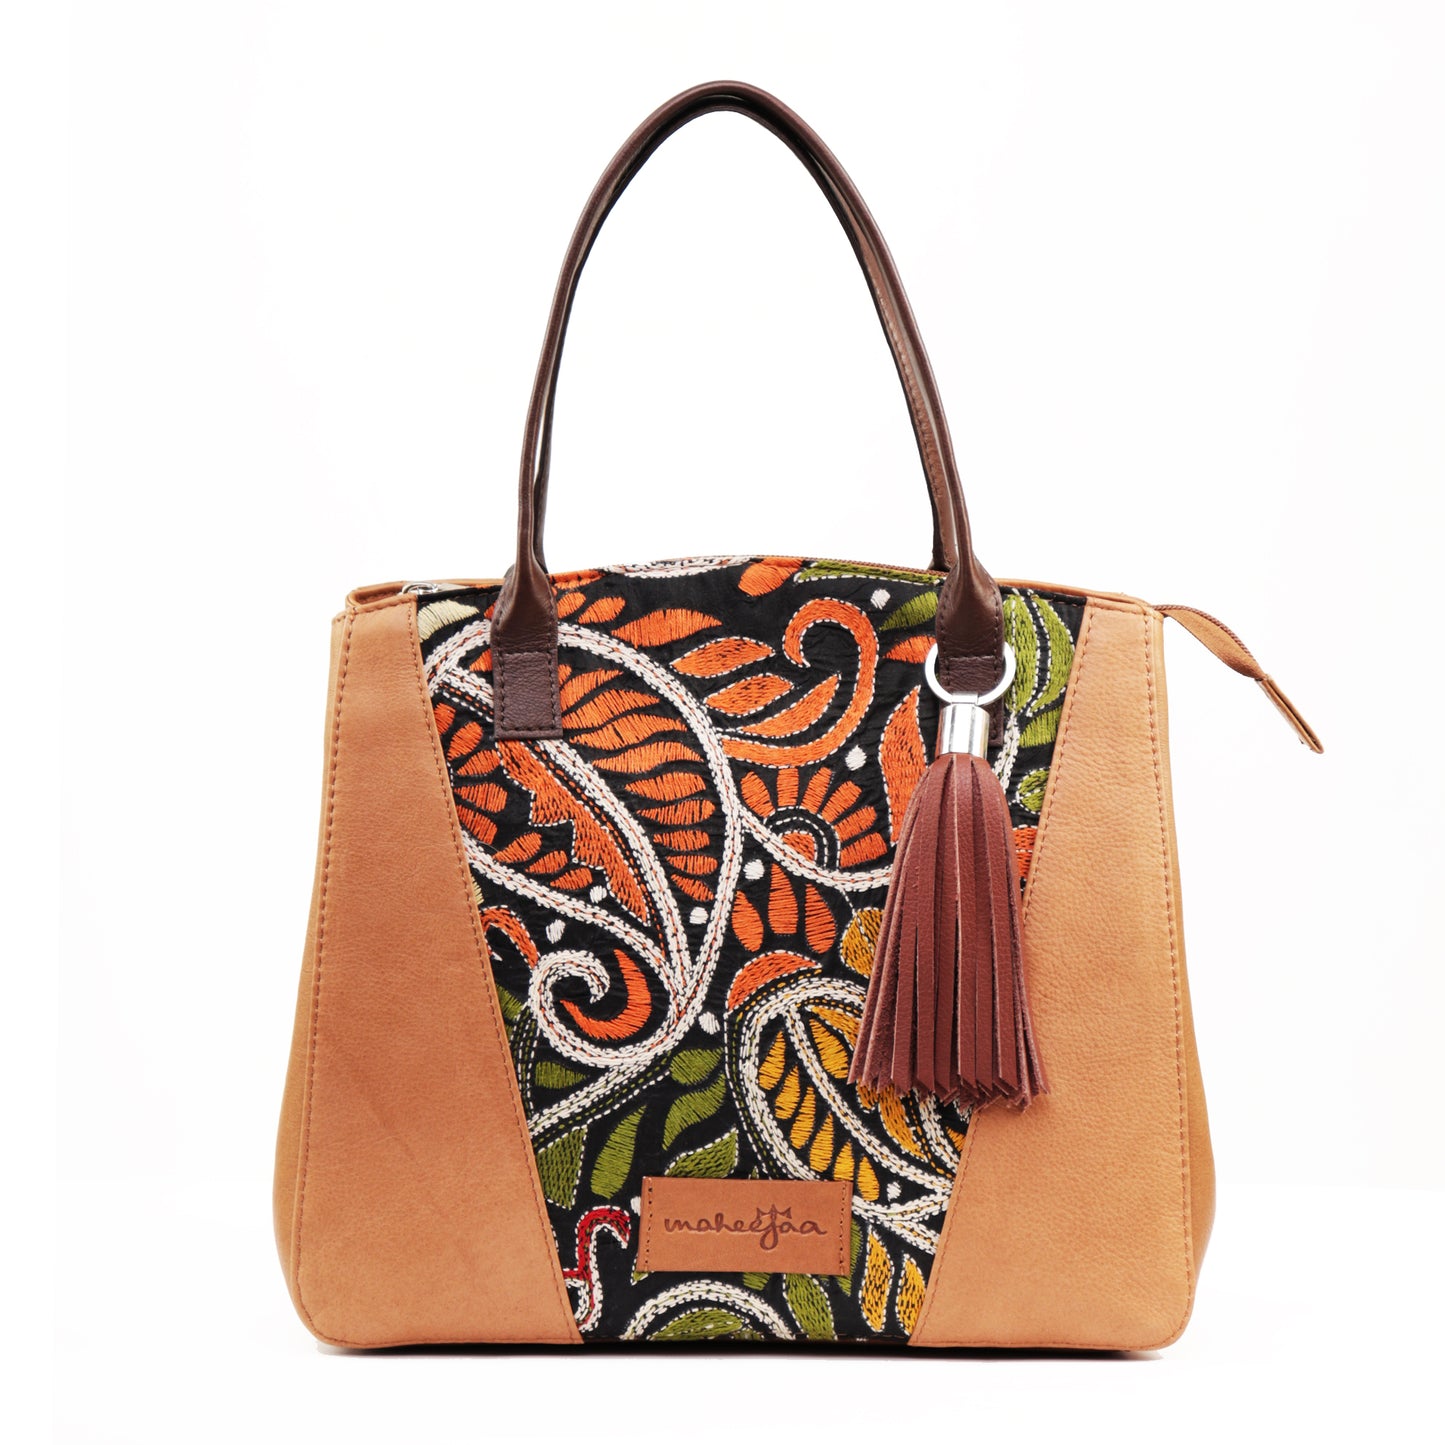 Genuine Leather-Kantha Handcrafted Tote Bag Women (Orange Tan)